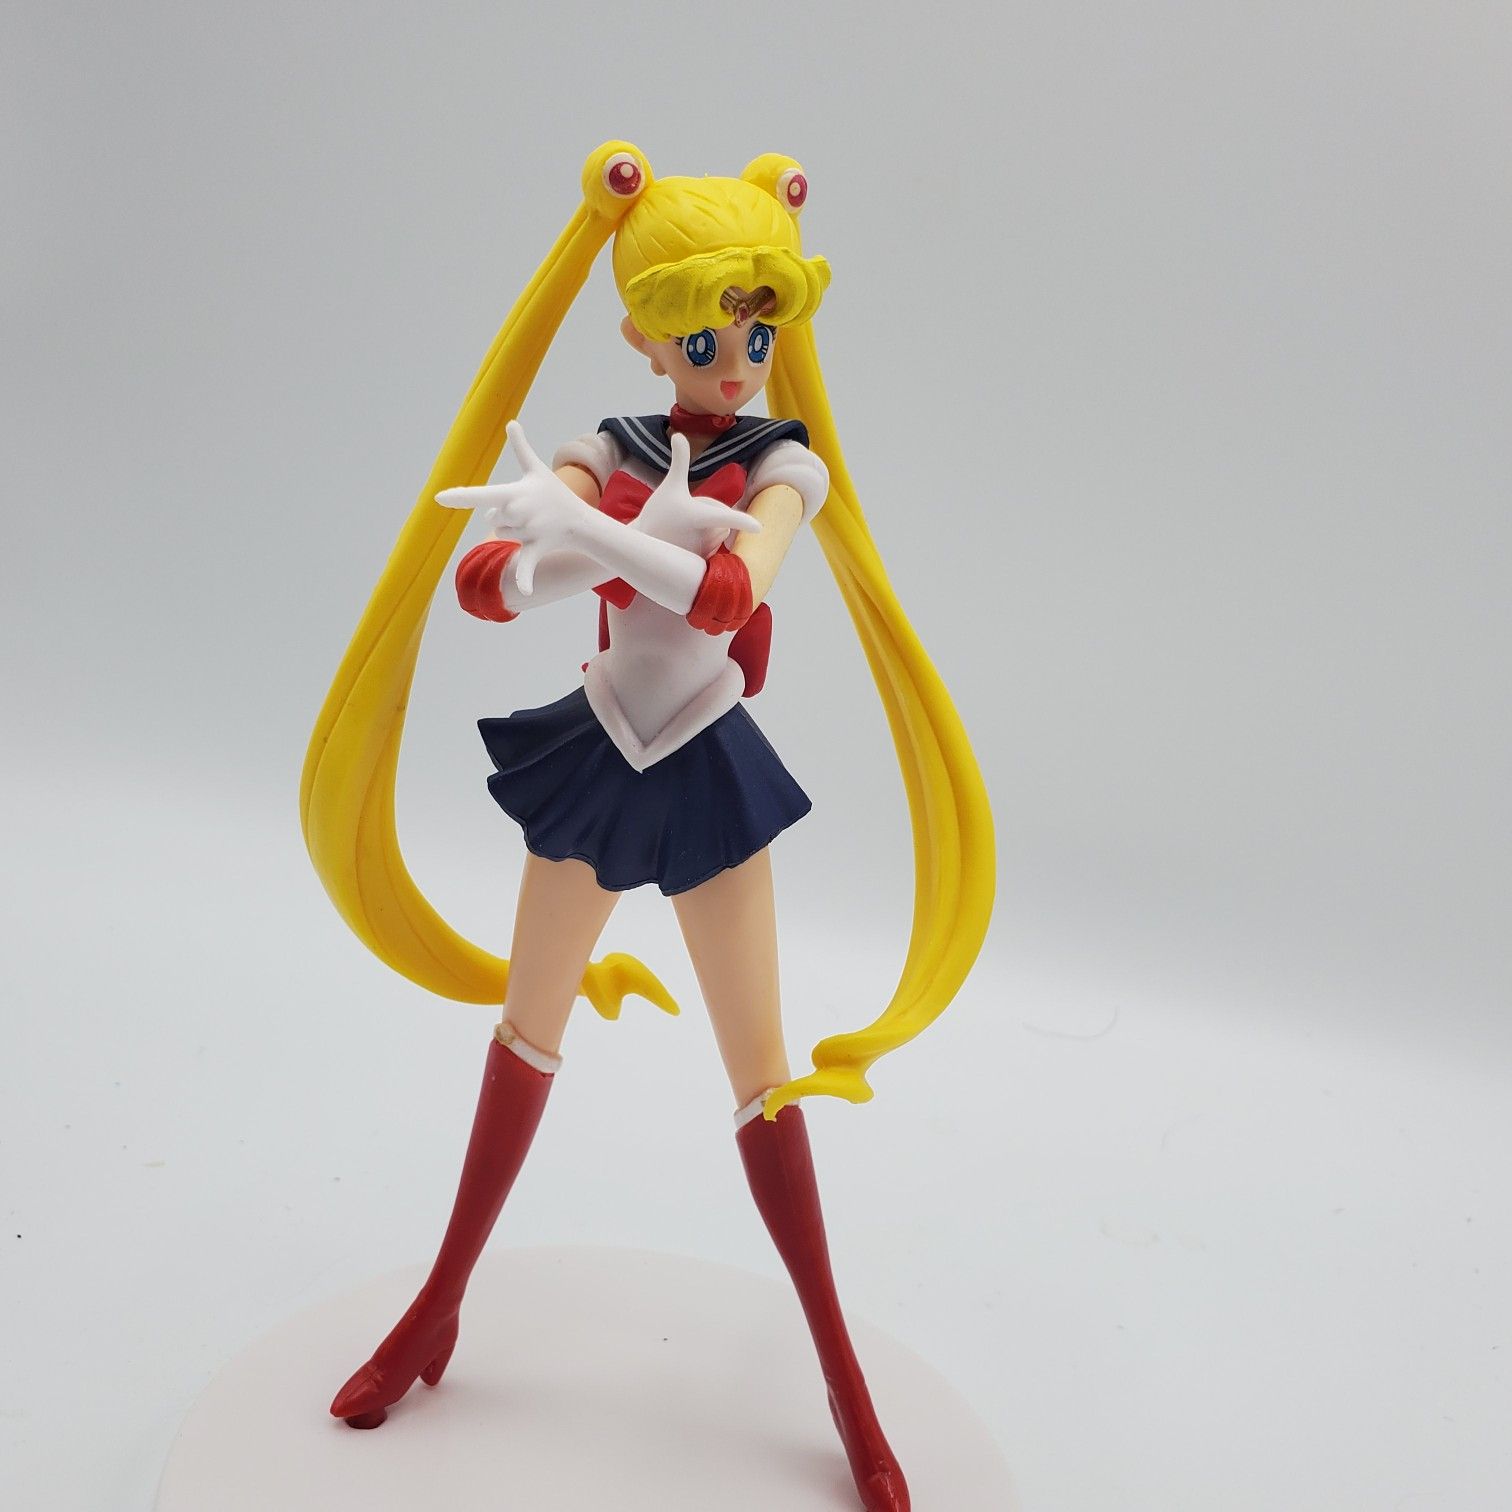 Sailor moon pvc new